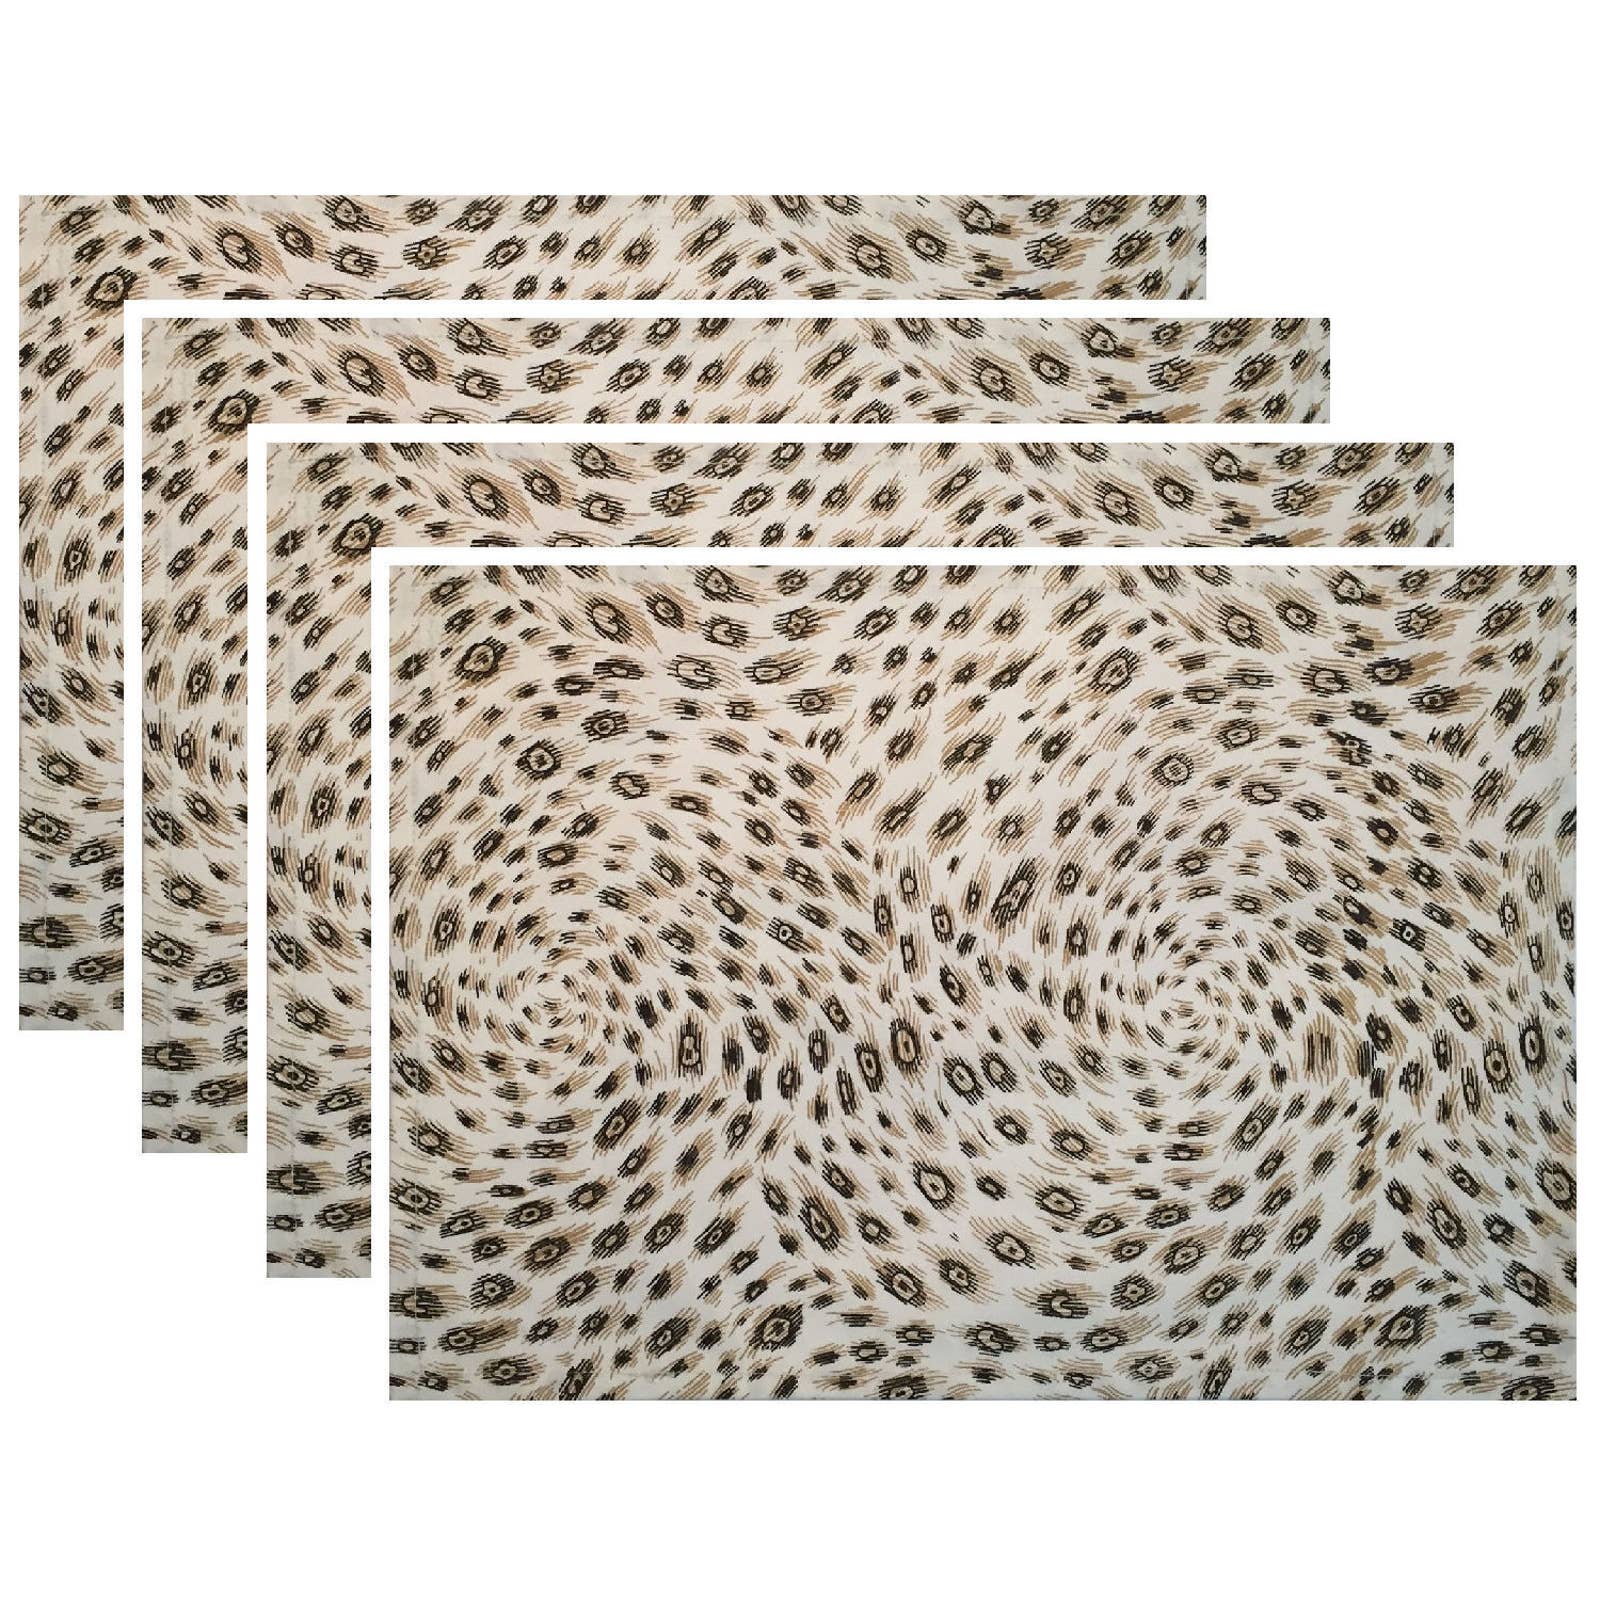 Set of 4 Leopard Print Placemats 100% Cotton Classic Retro Kitchen 13x19"  NEW